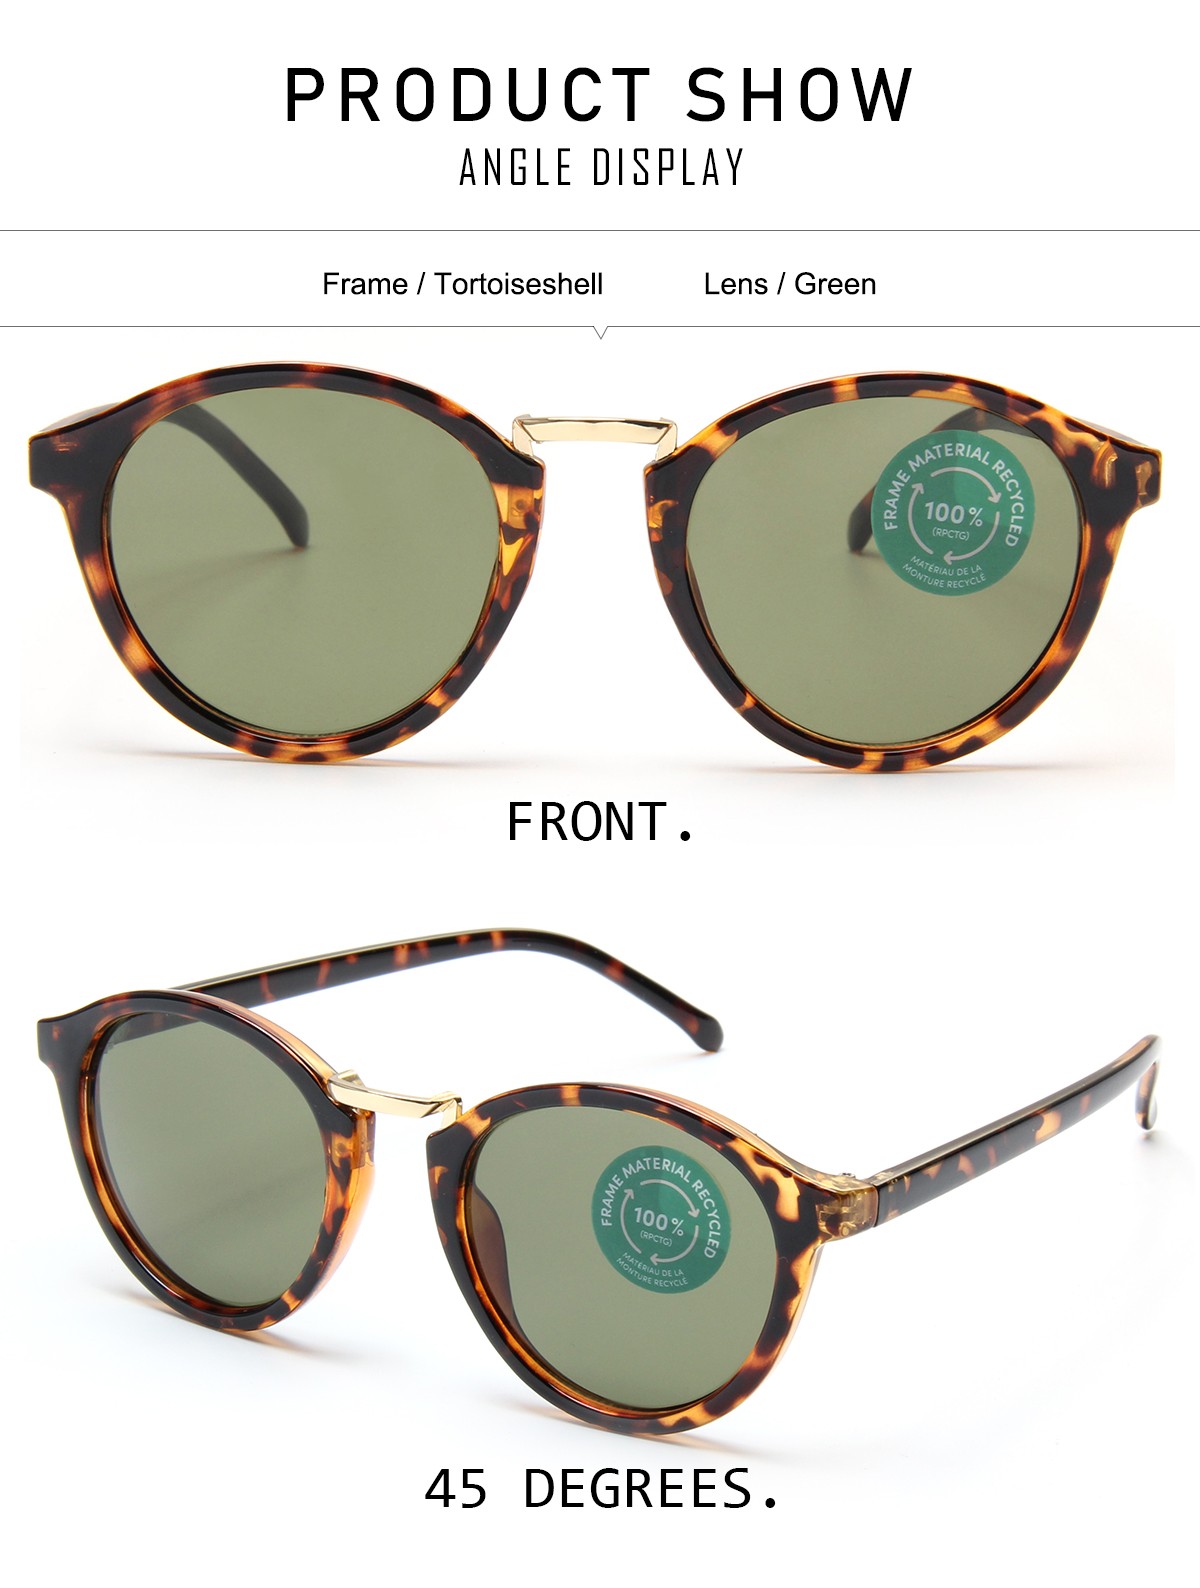 Eugenia environmentally friendly sunglasses marketing for recycle-2